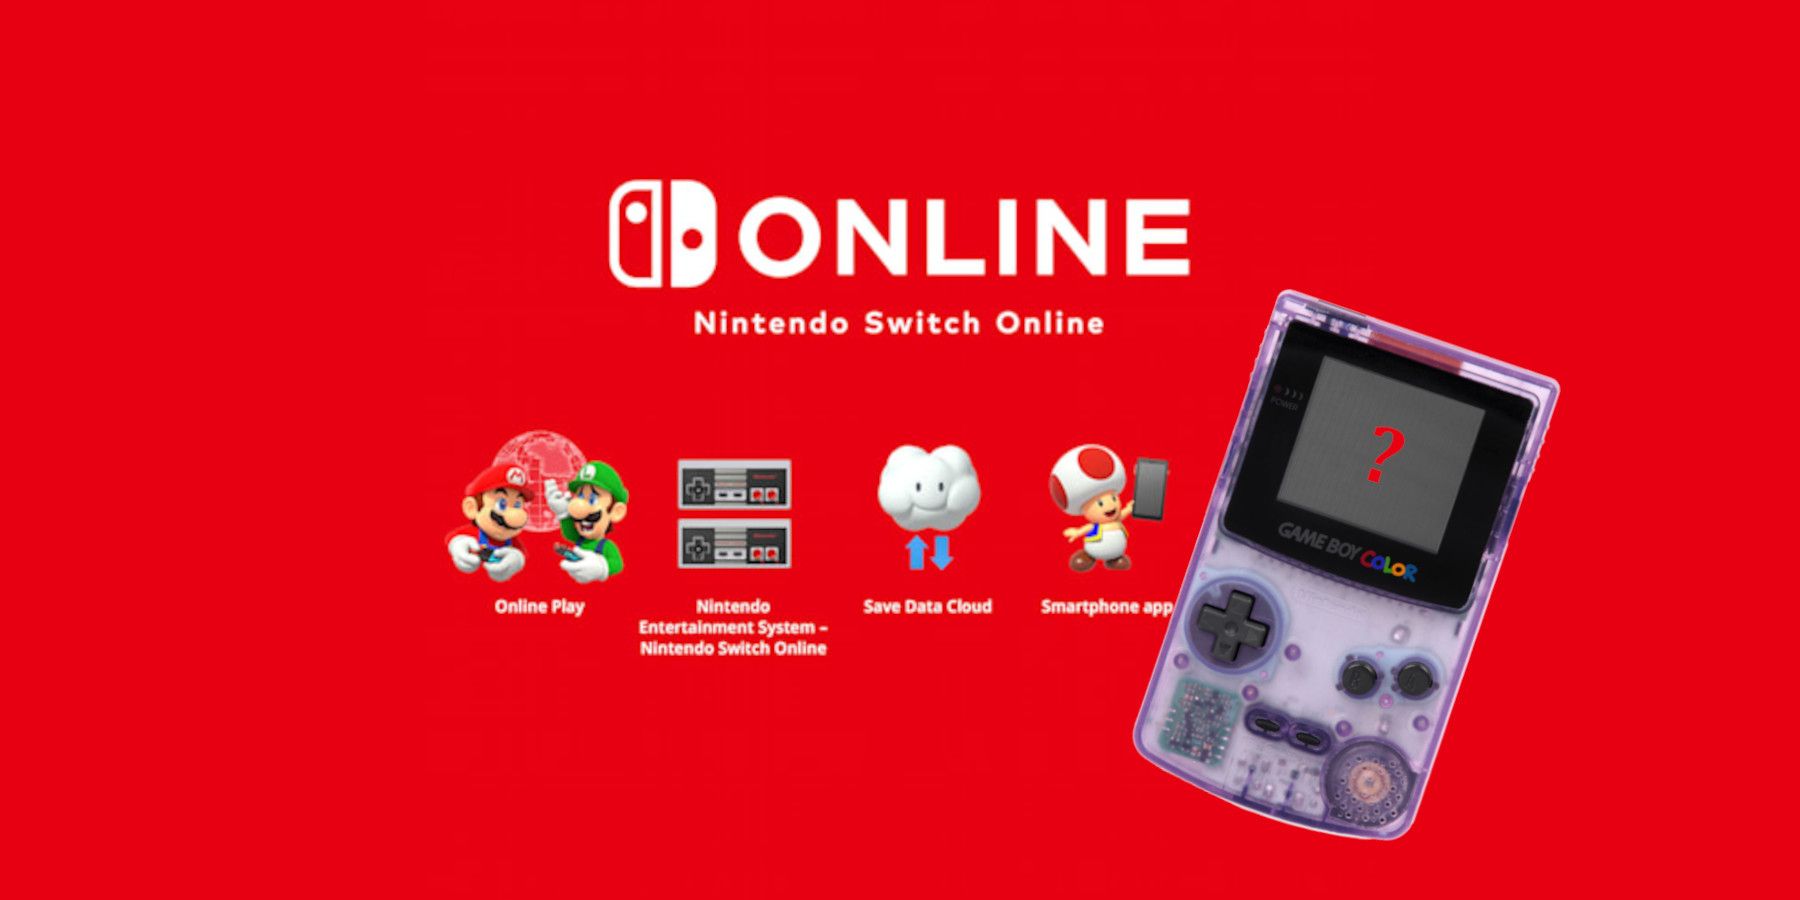 Nintendo-Switch-Online-Game-Boy-Games-1